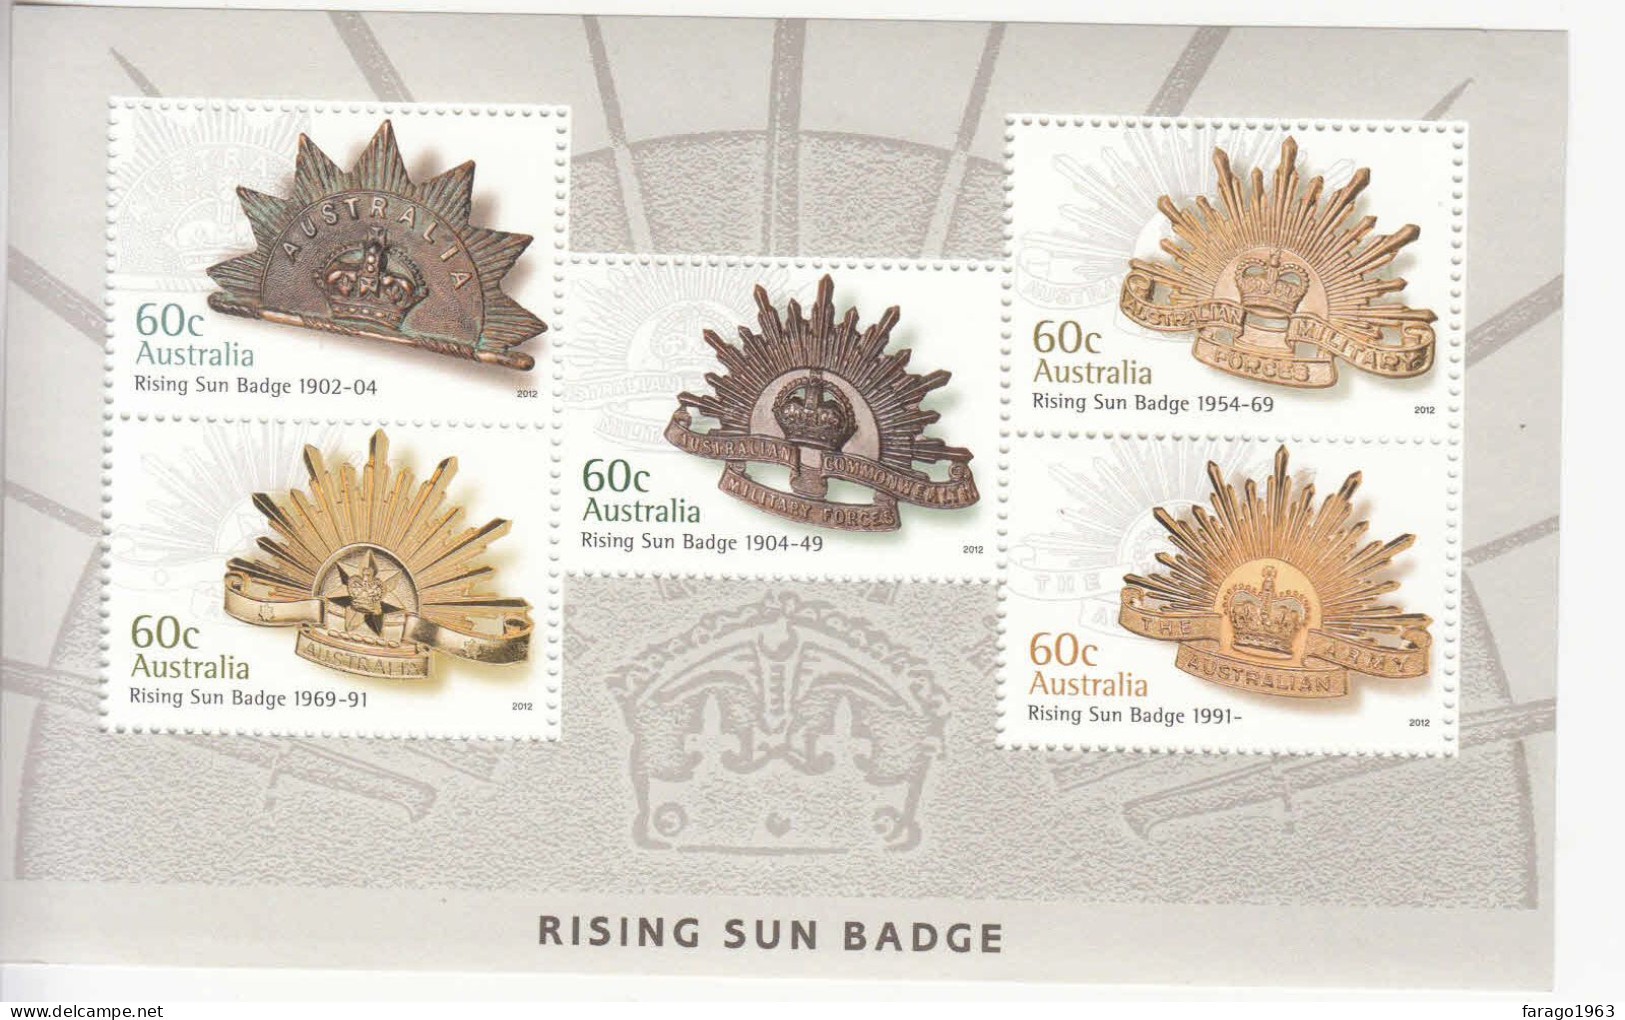 2012 Australia Rising Star Badge Military Souvenir Sheet MNH - Mint Stamps